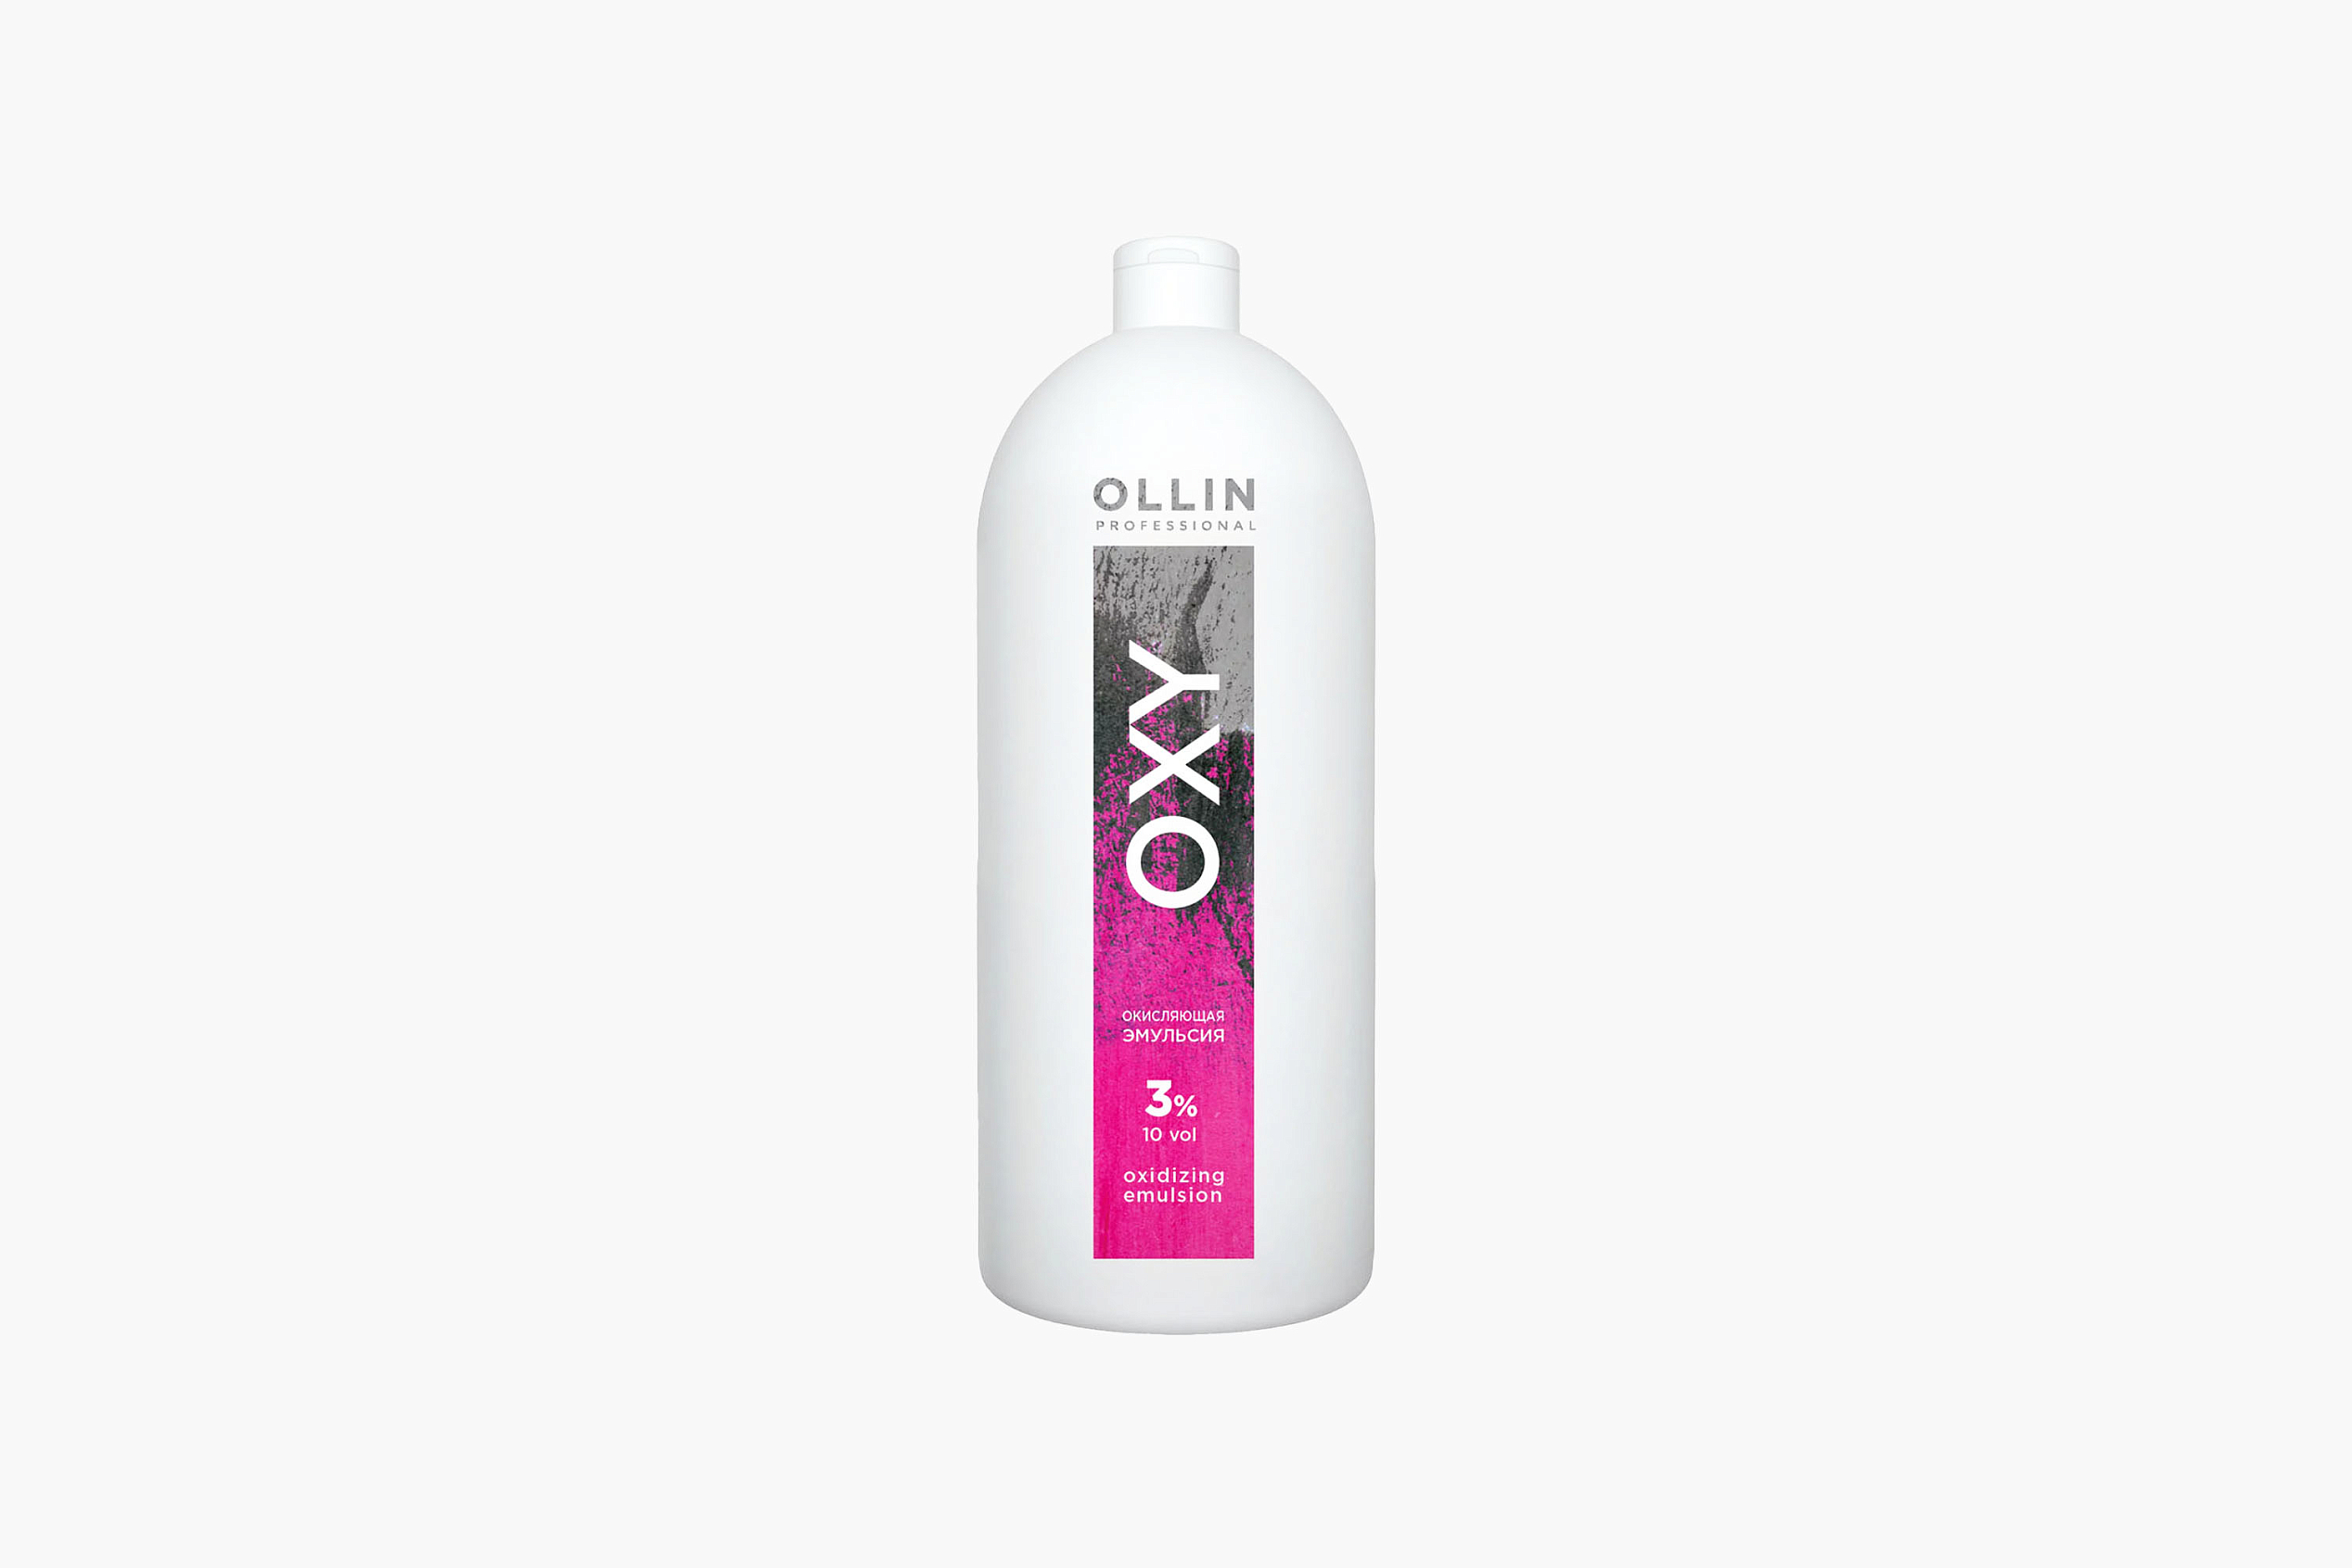 Ollin Professional Oxy 3% 10vol фото 1